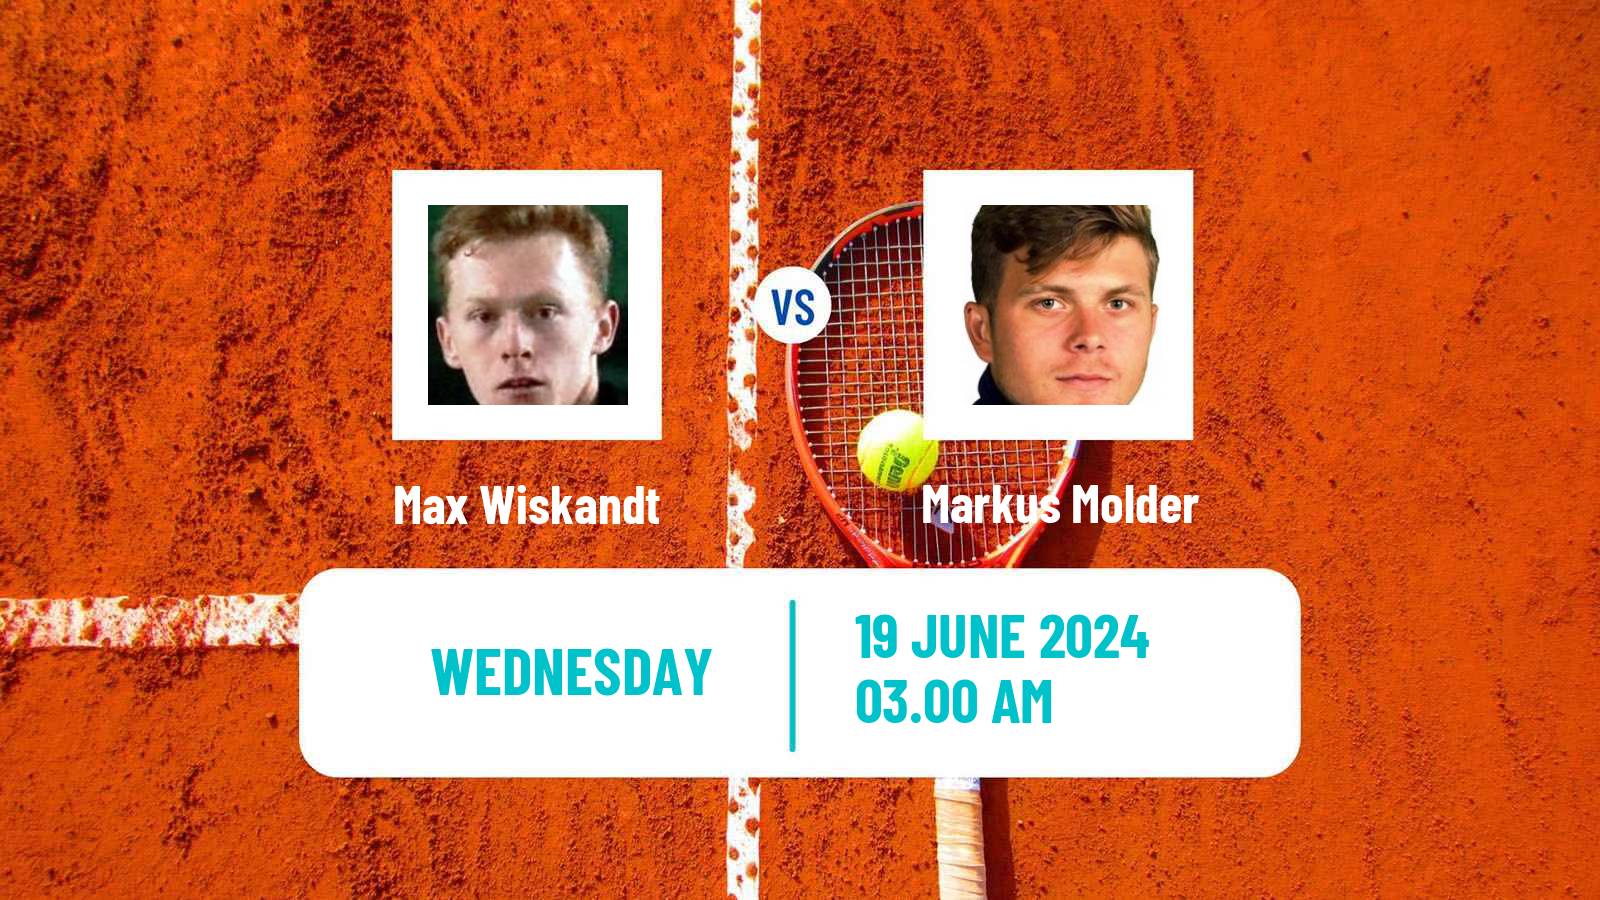 Tennis ITF M15 Koszalin 2 Men Max Wiskandt - Markus Molder